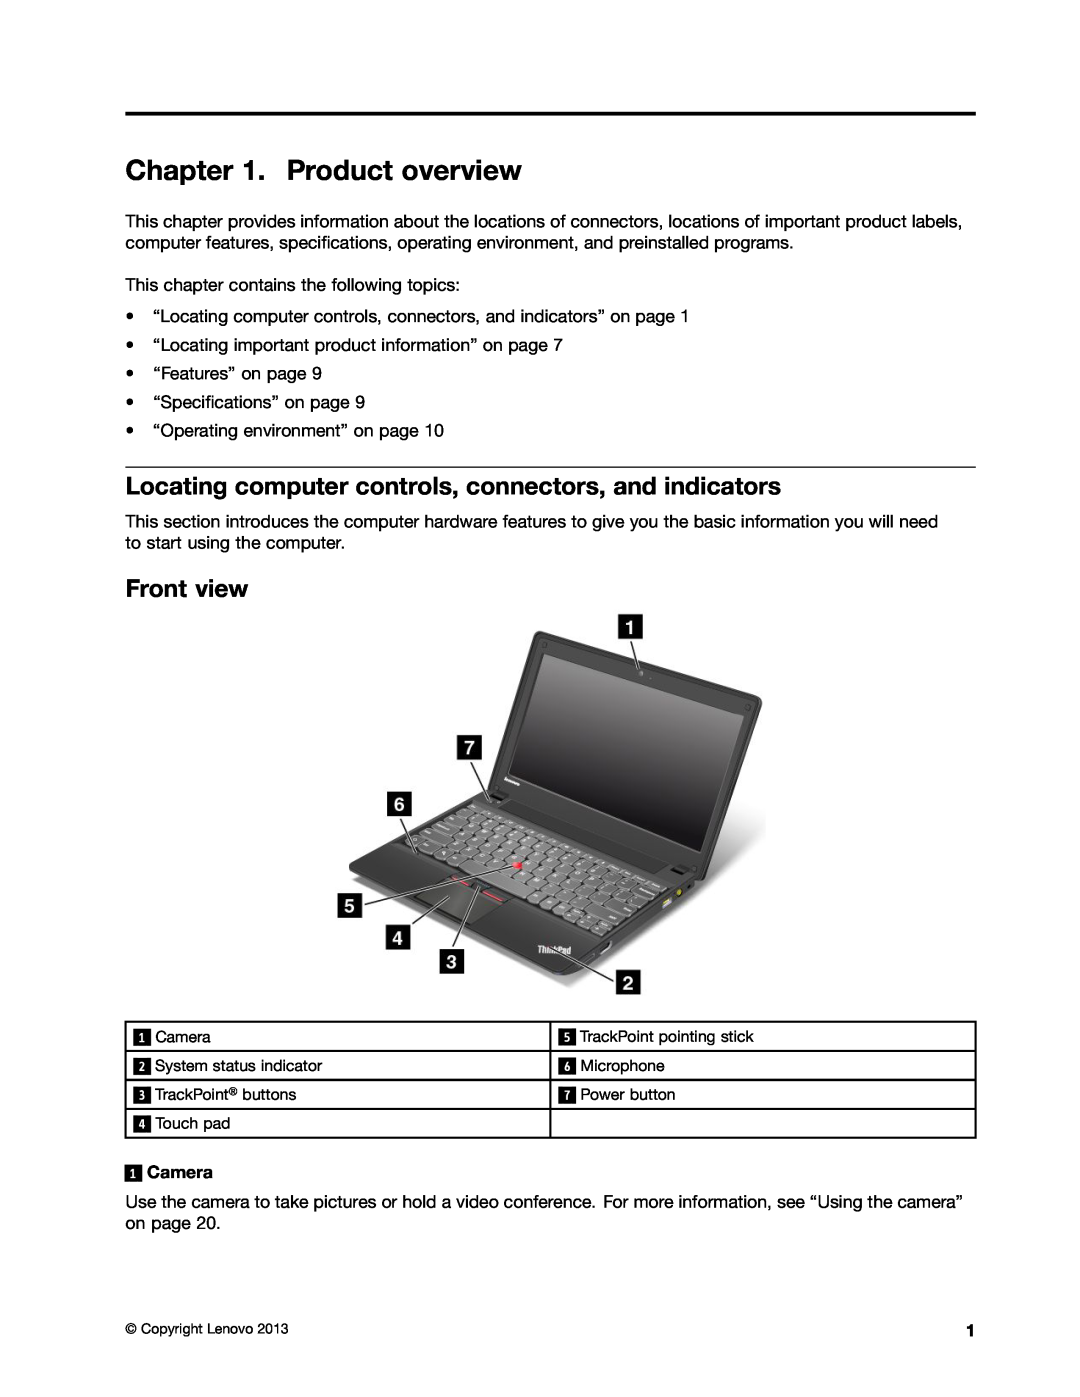 Lenovo 628323U manual Product overview, Locating computer controls, connectors, and indicators, Front view, Camera 